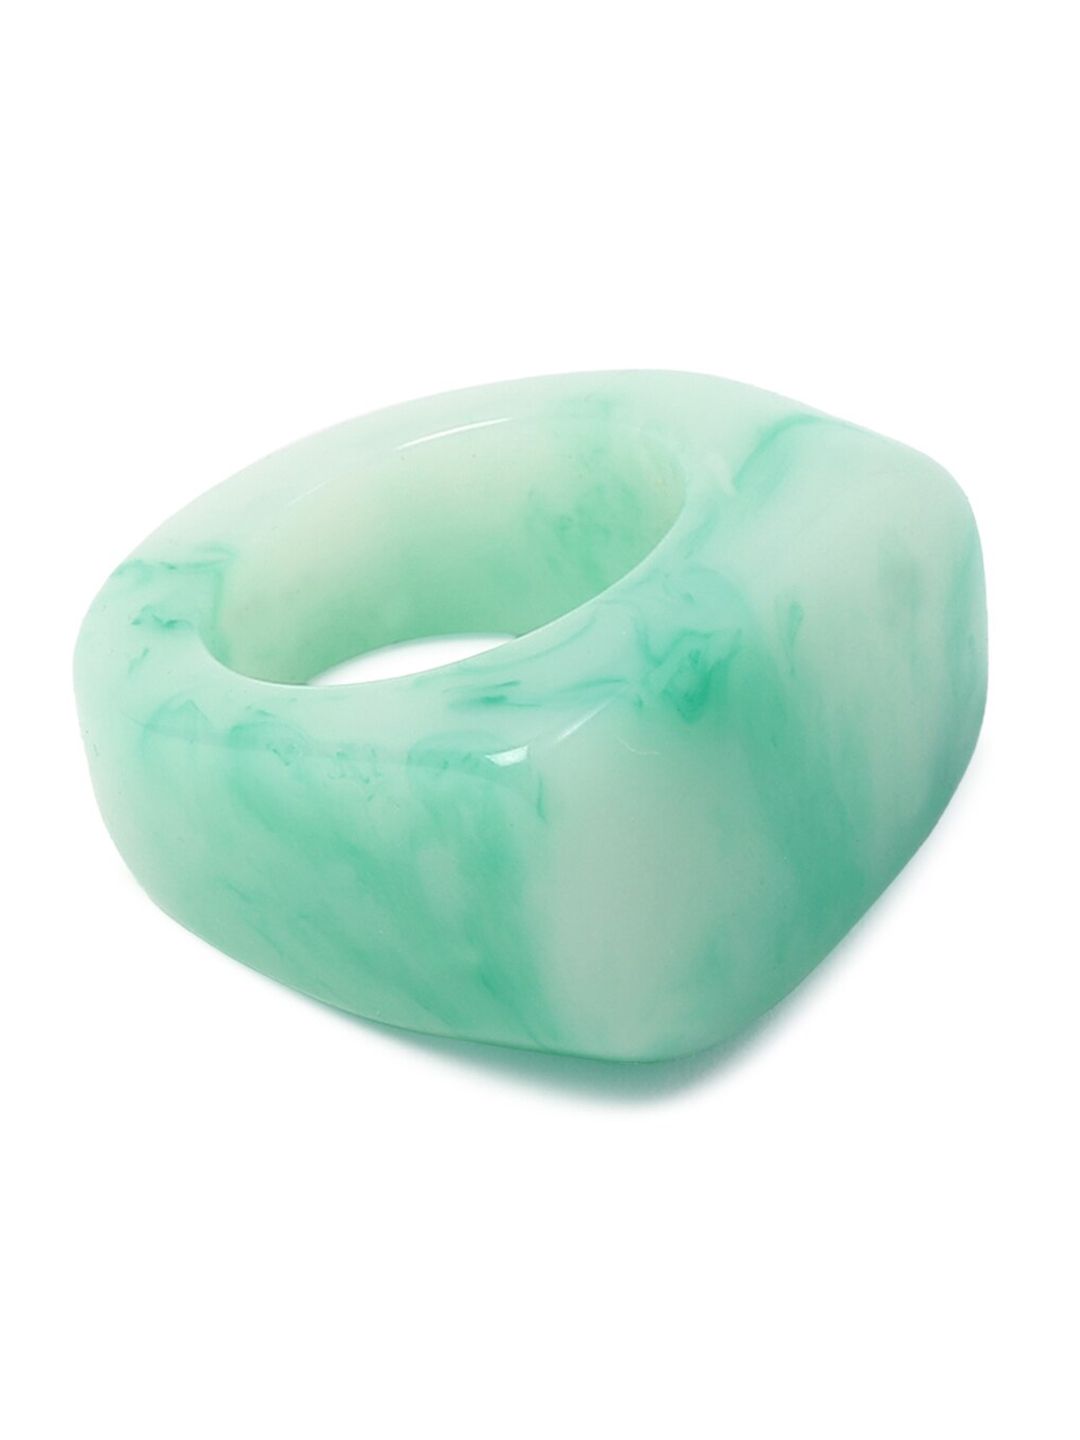 FOREVER 21 Green Patterned Resin Finger Ring Price in India